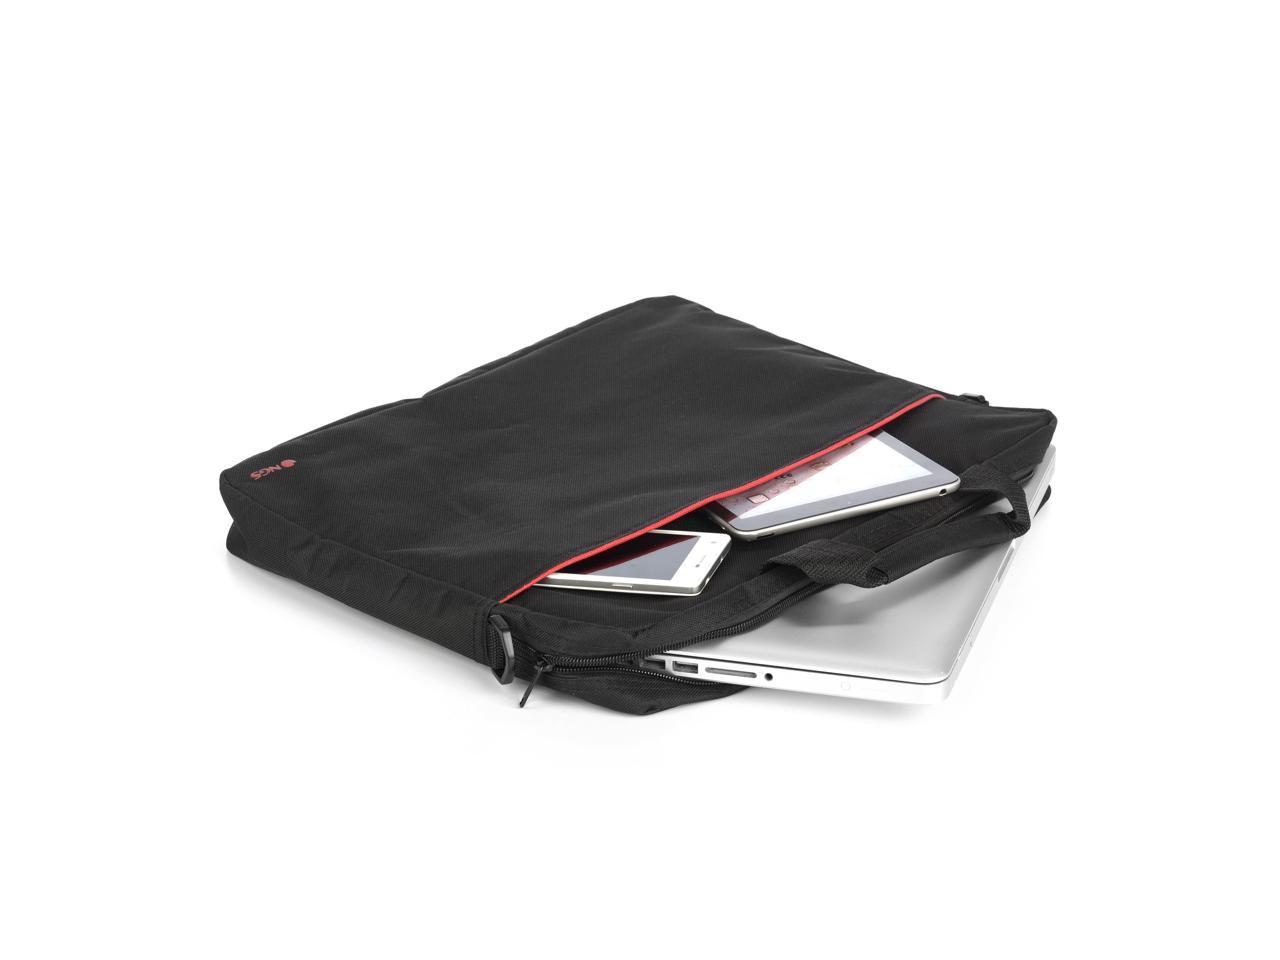 NGS 15.6" Laptop Bag Black and Red - Monray Enterprise